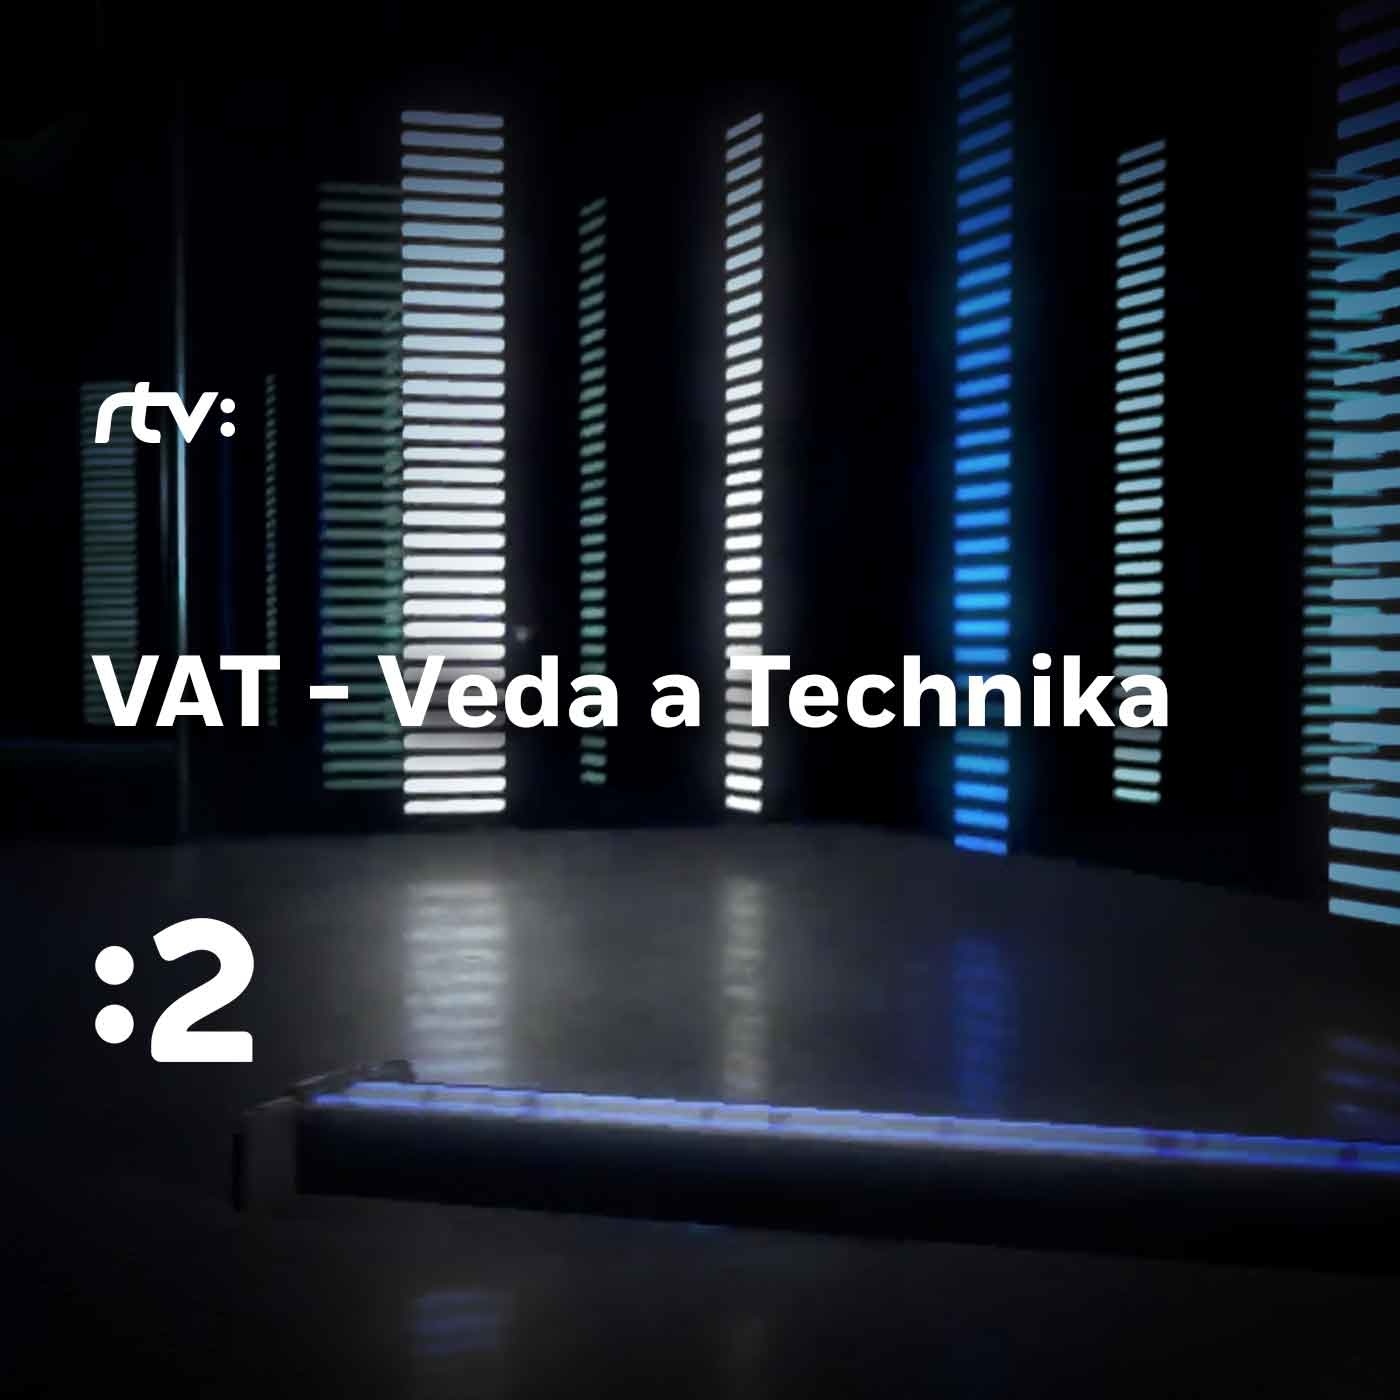 VaT - Veda a Technika